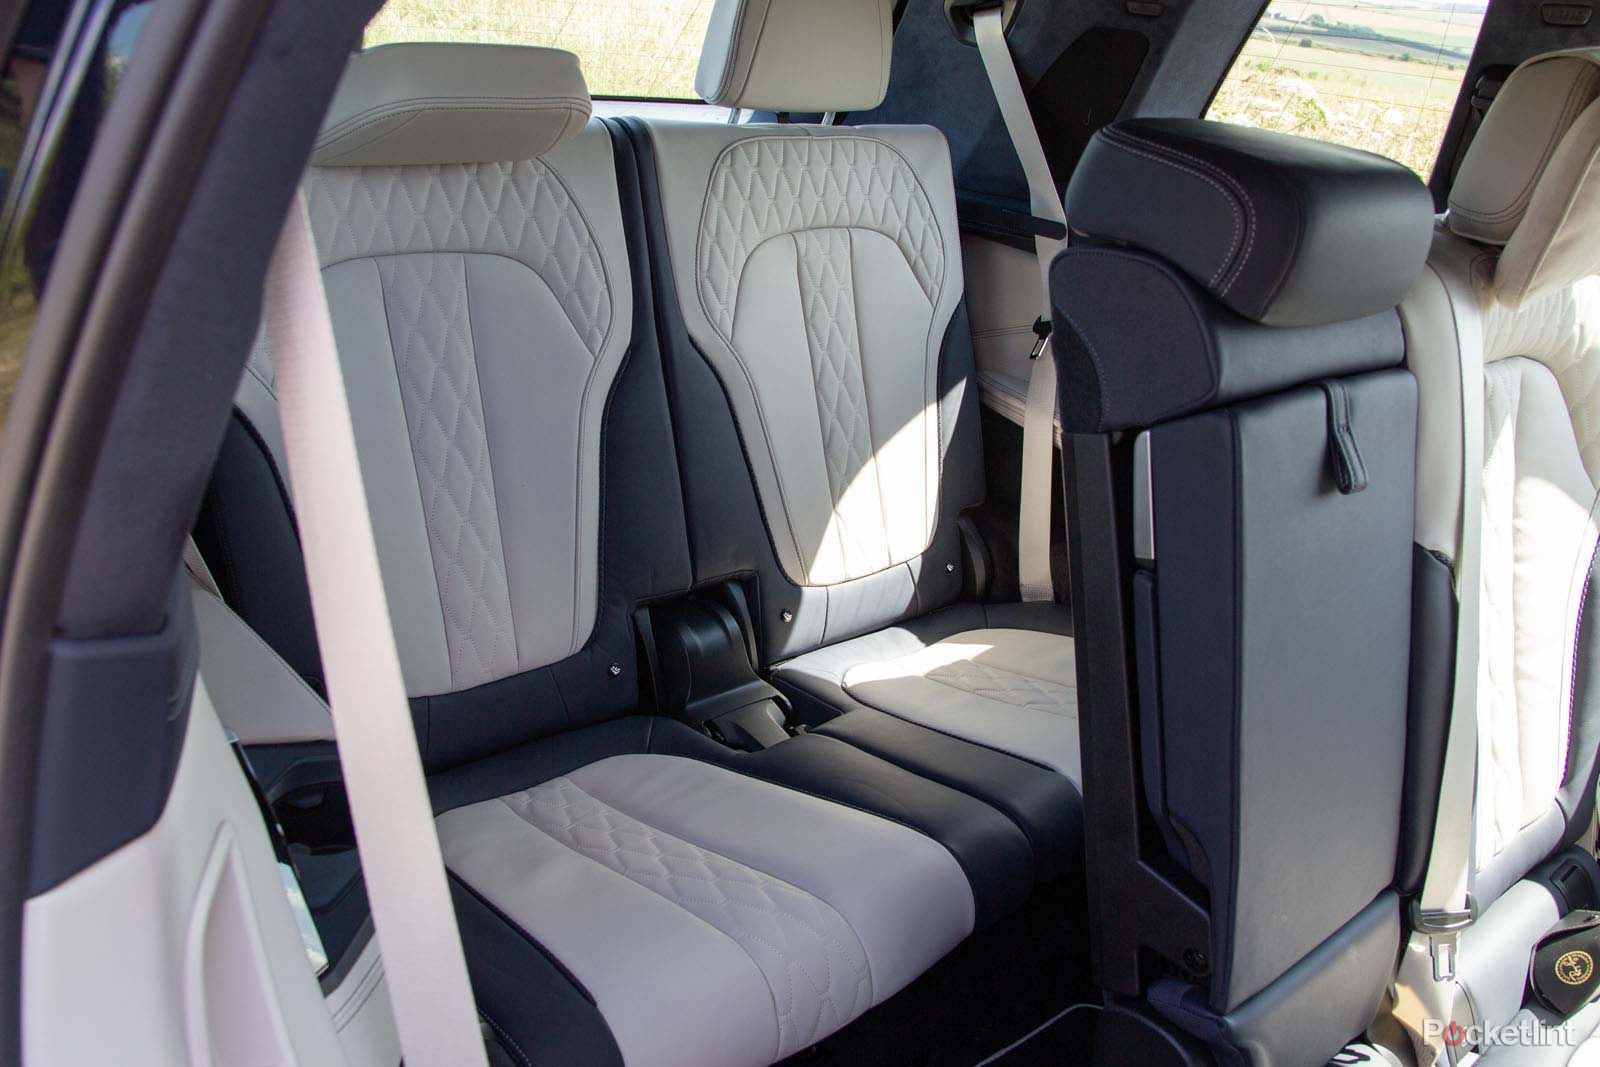 BMW X7 interior image 4